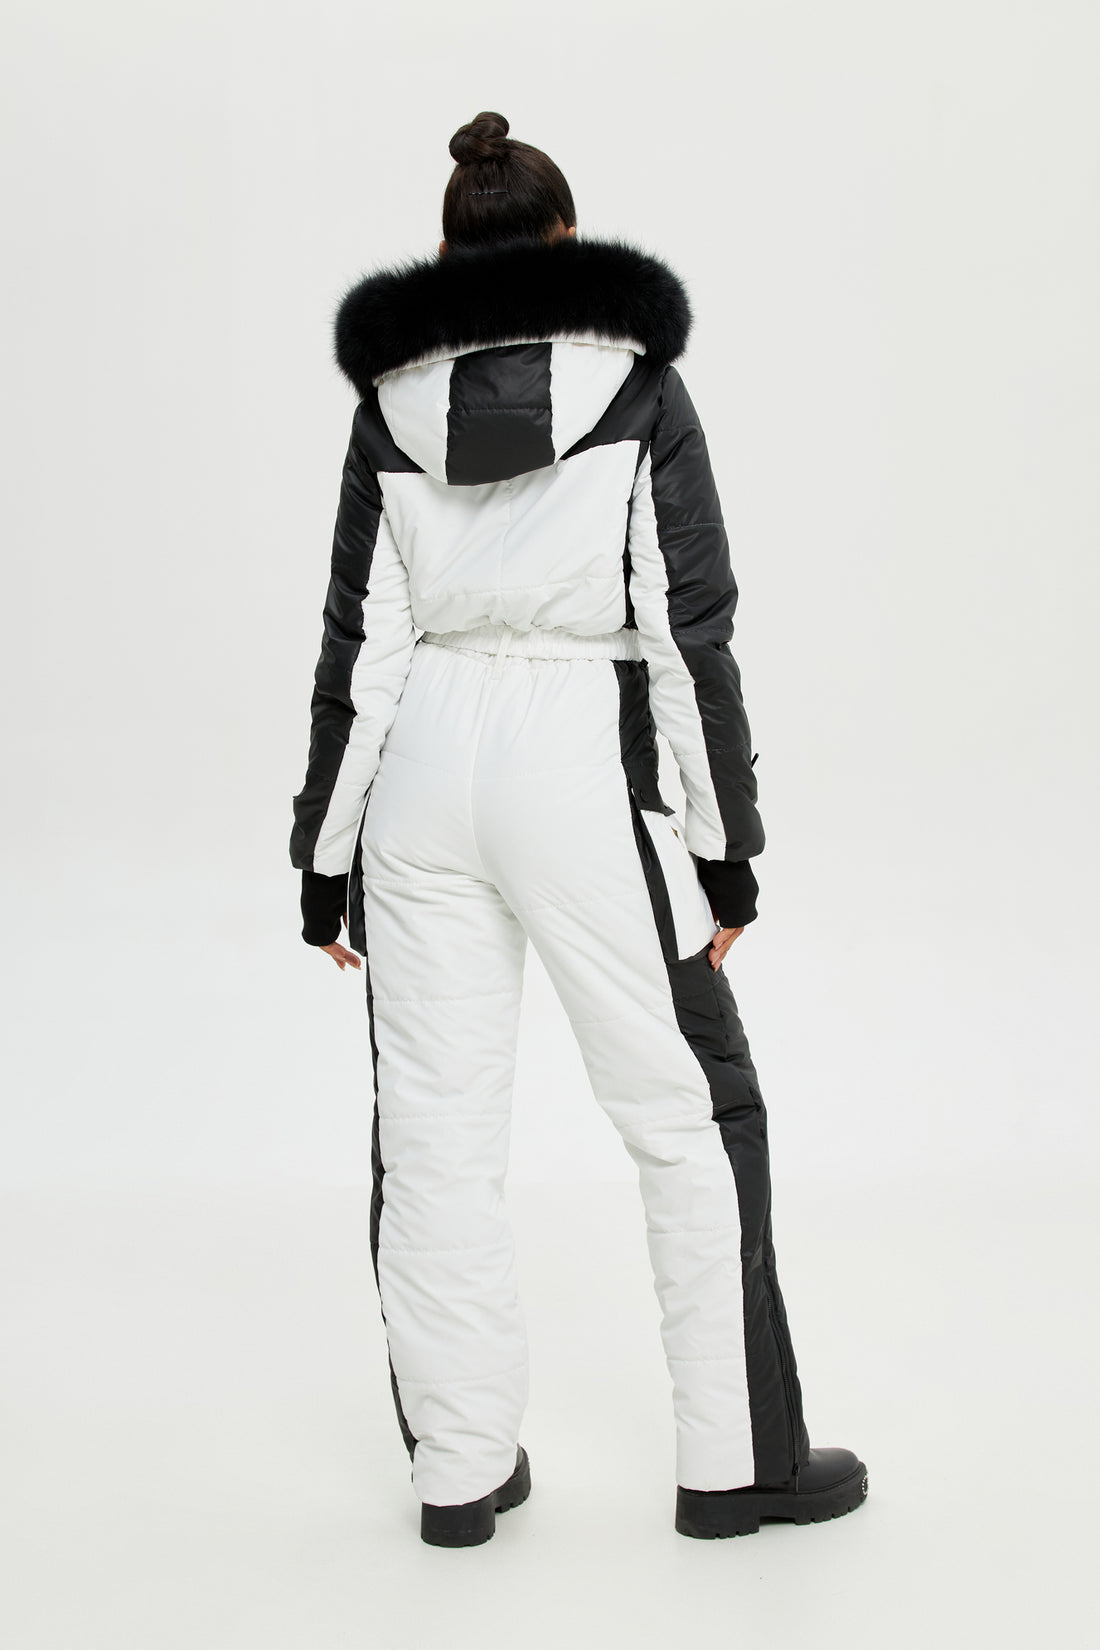 White skisuit one piece ETNA - White one piece - Snowsuit women outfit for ski trip